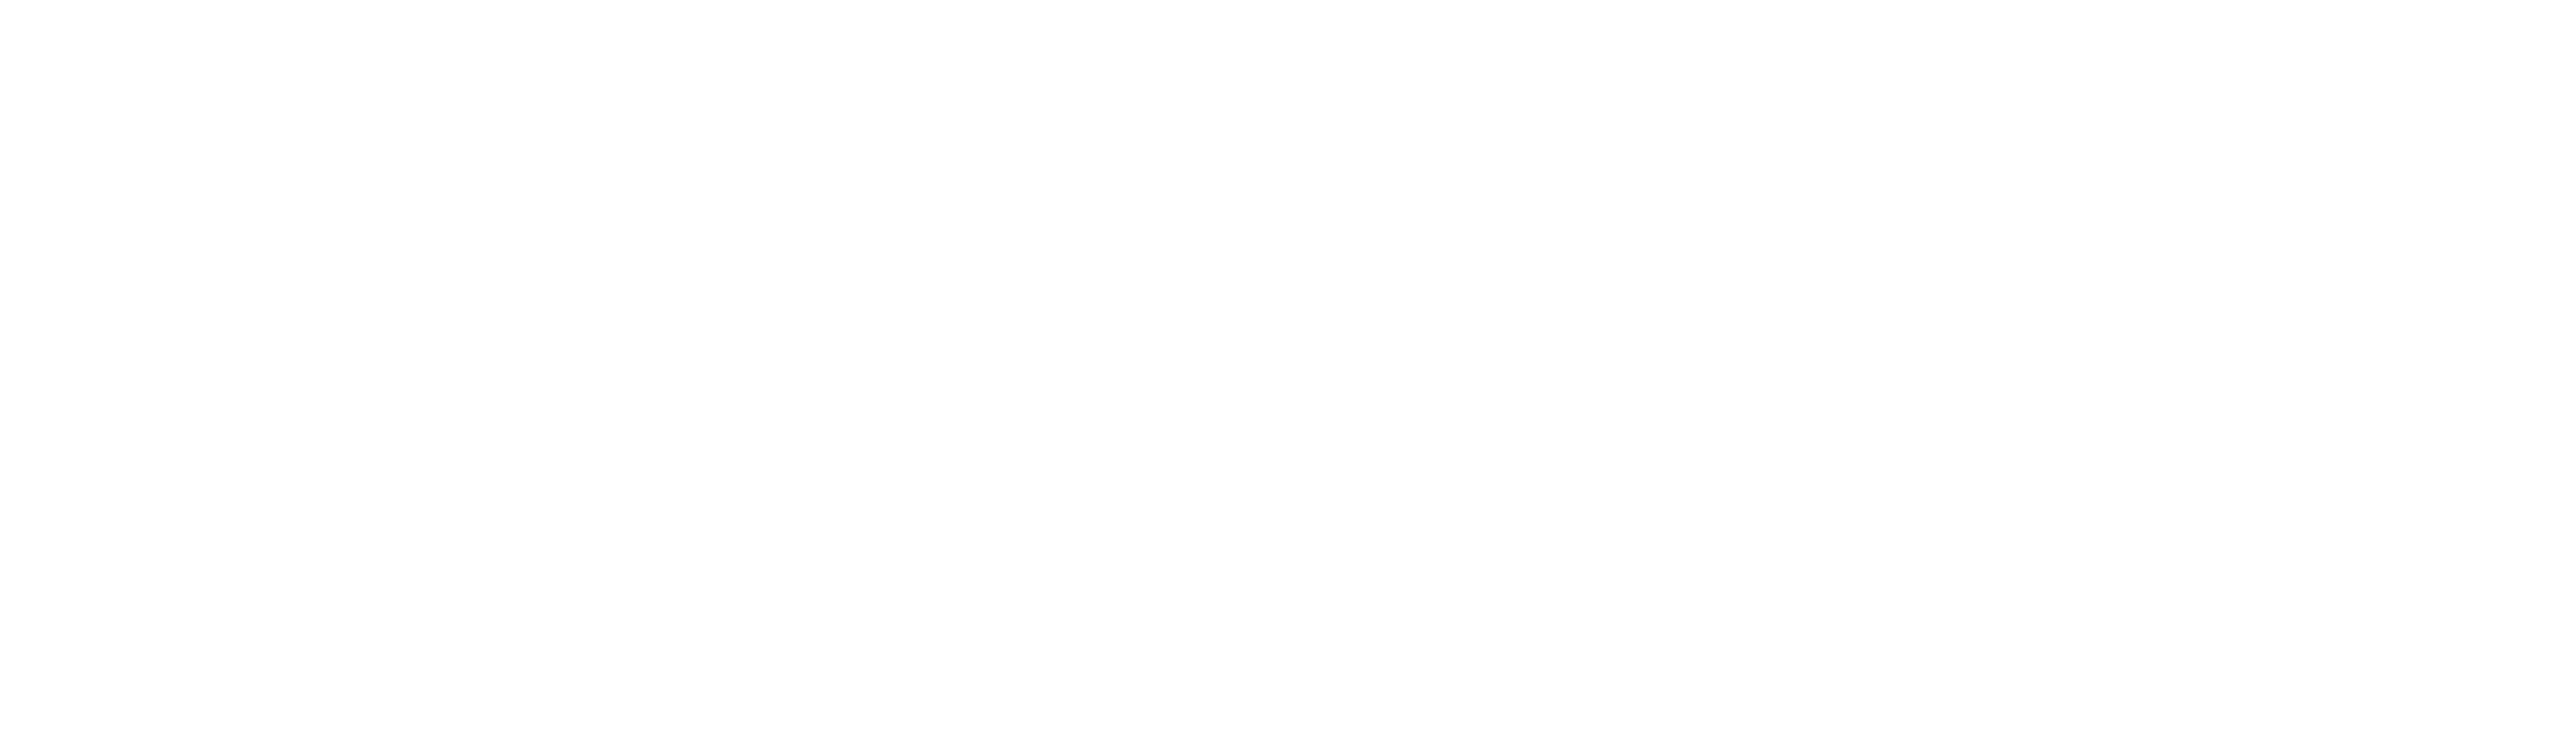 Expert Education India